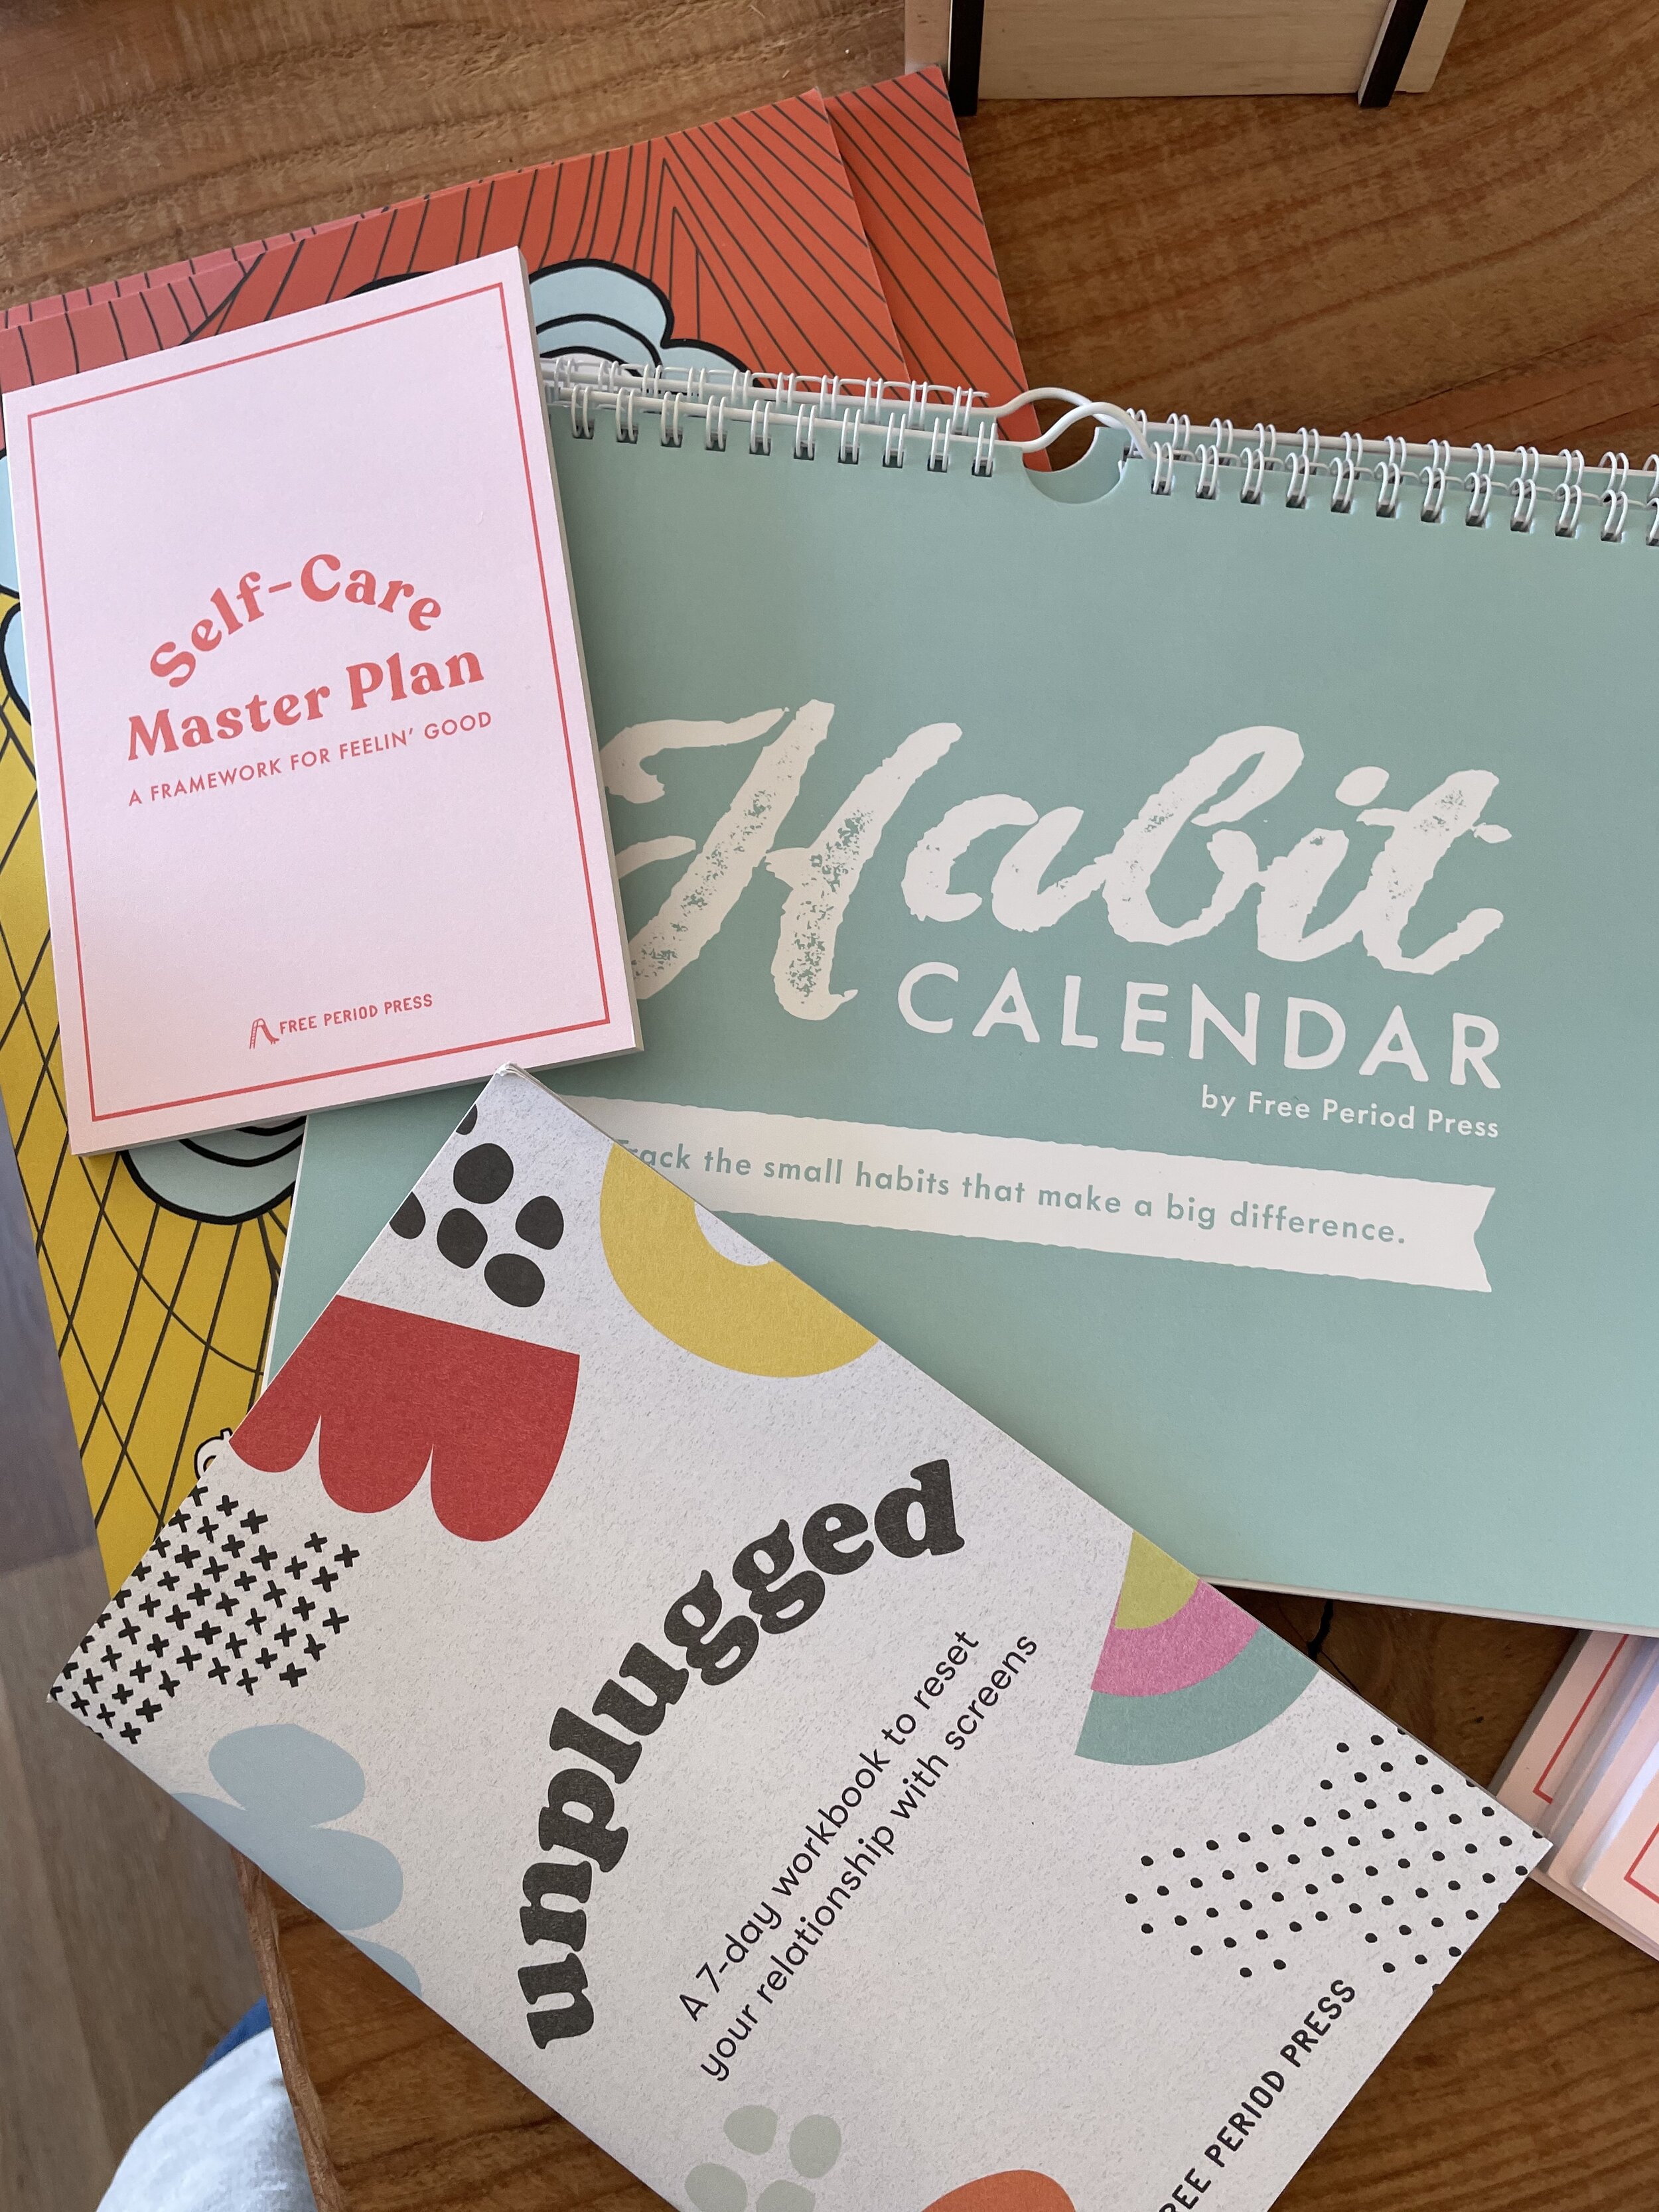 Habit Calendar by free period press